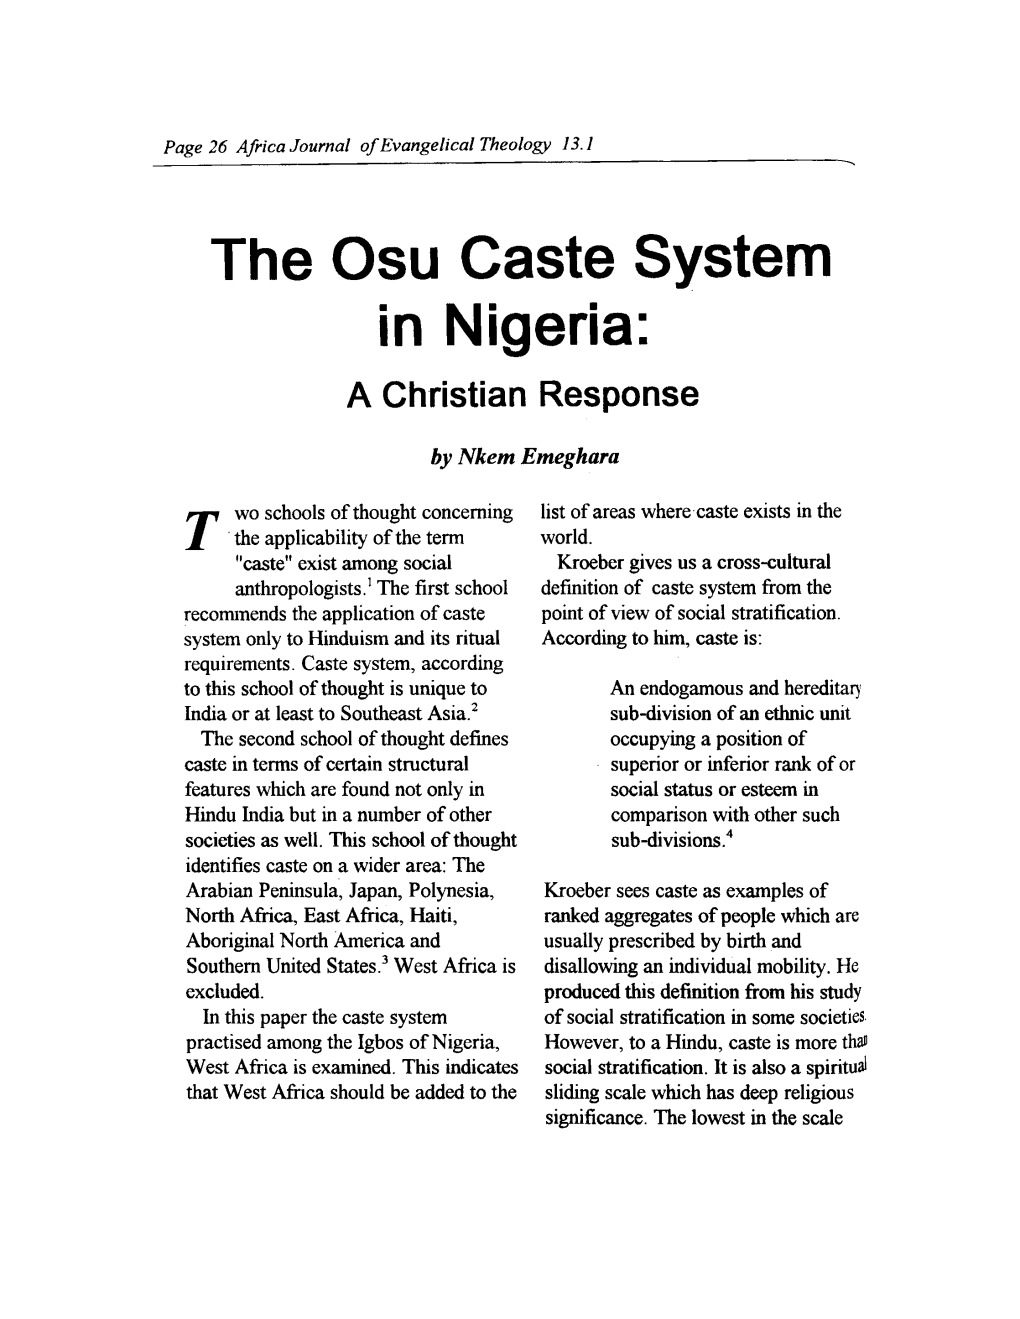 The Osu Caste System in Nigeria: a Christian Response